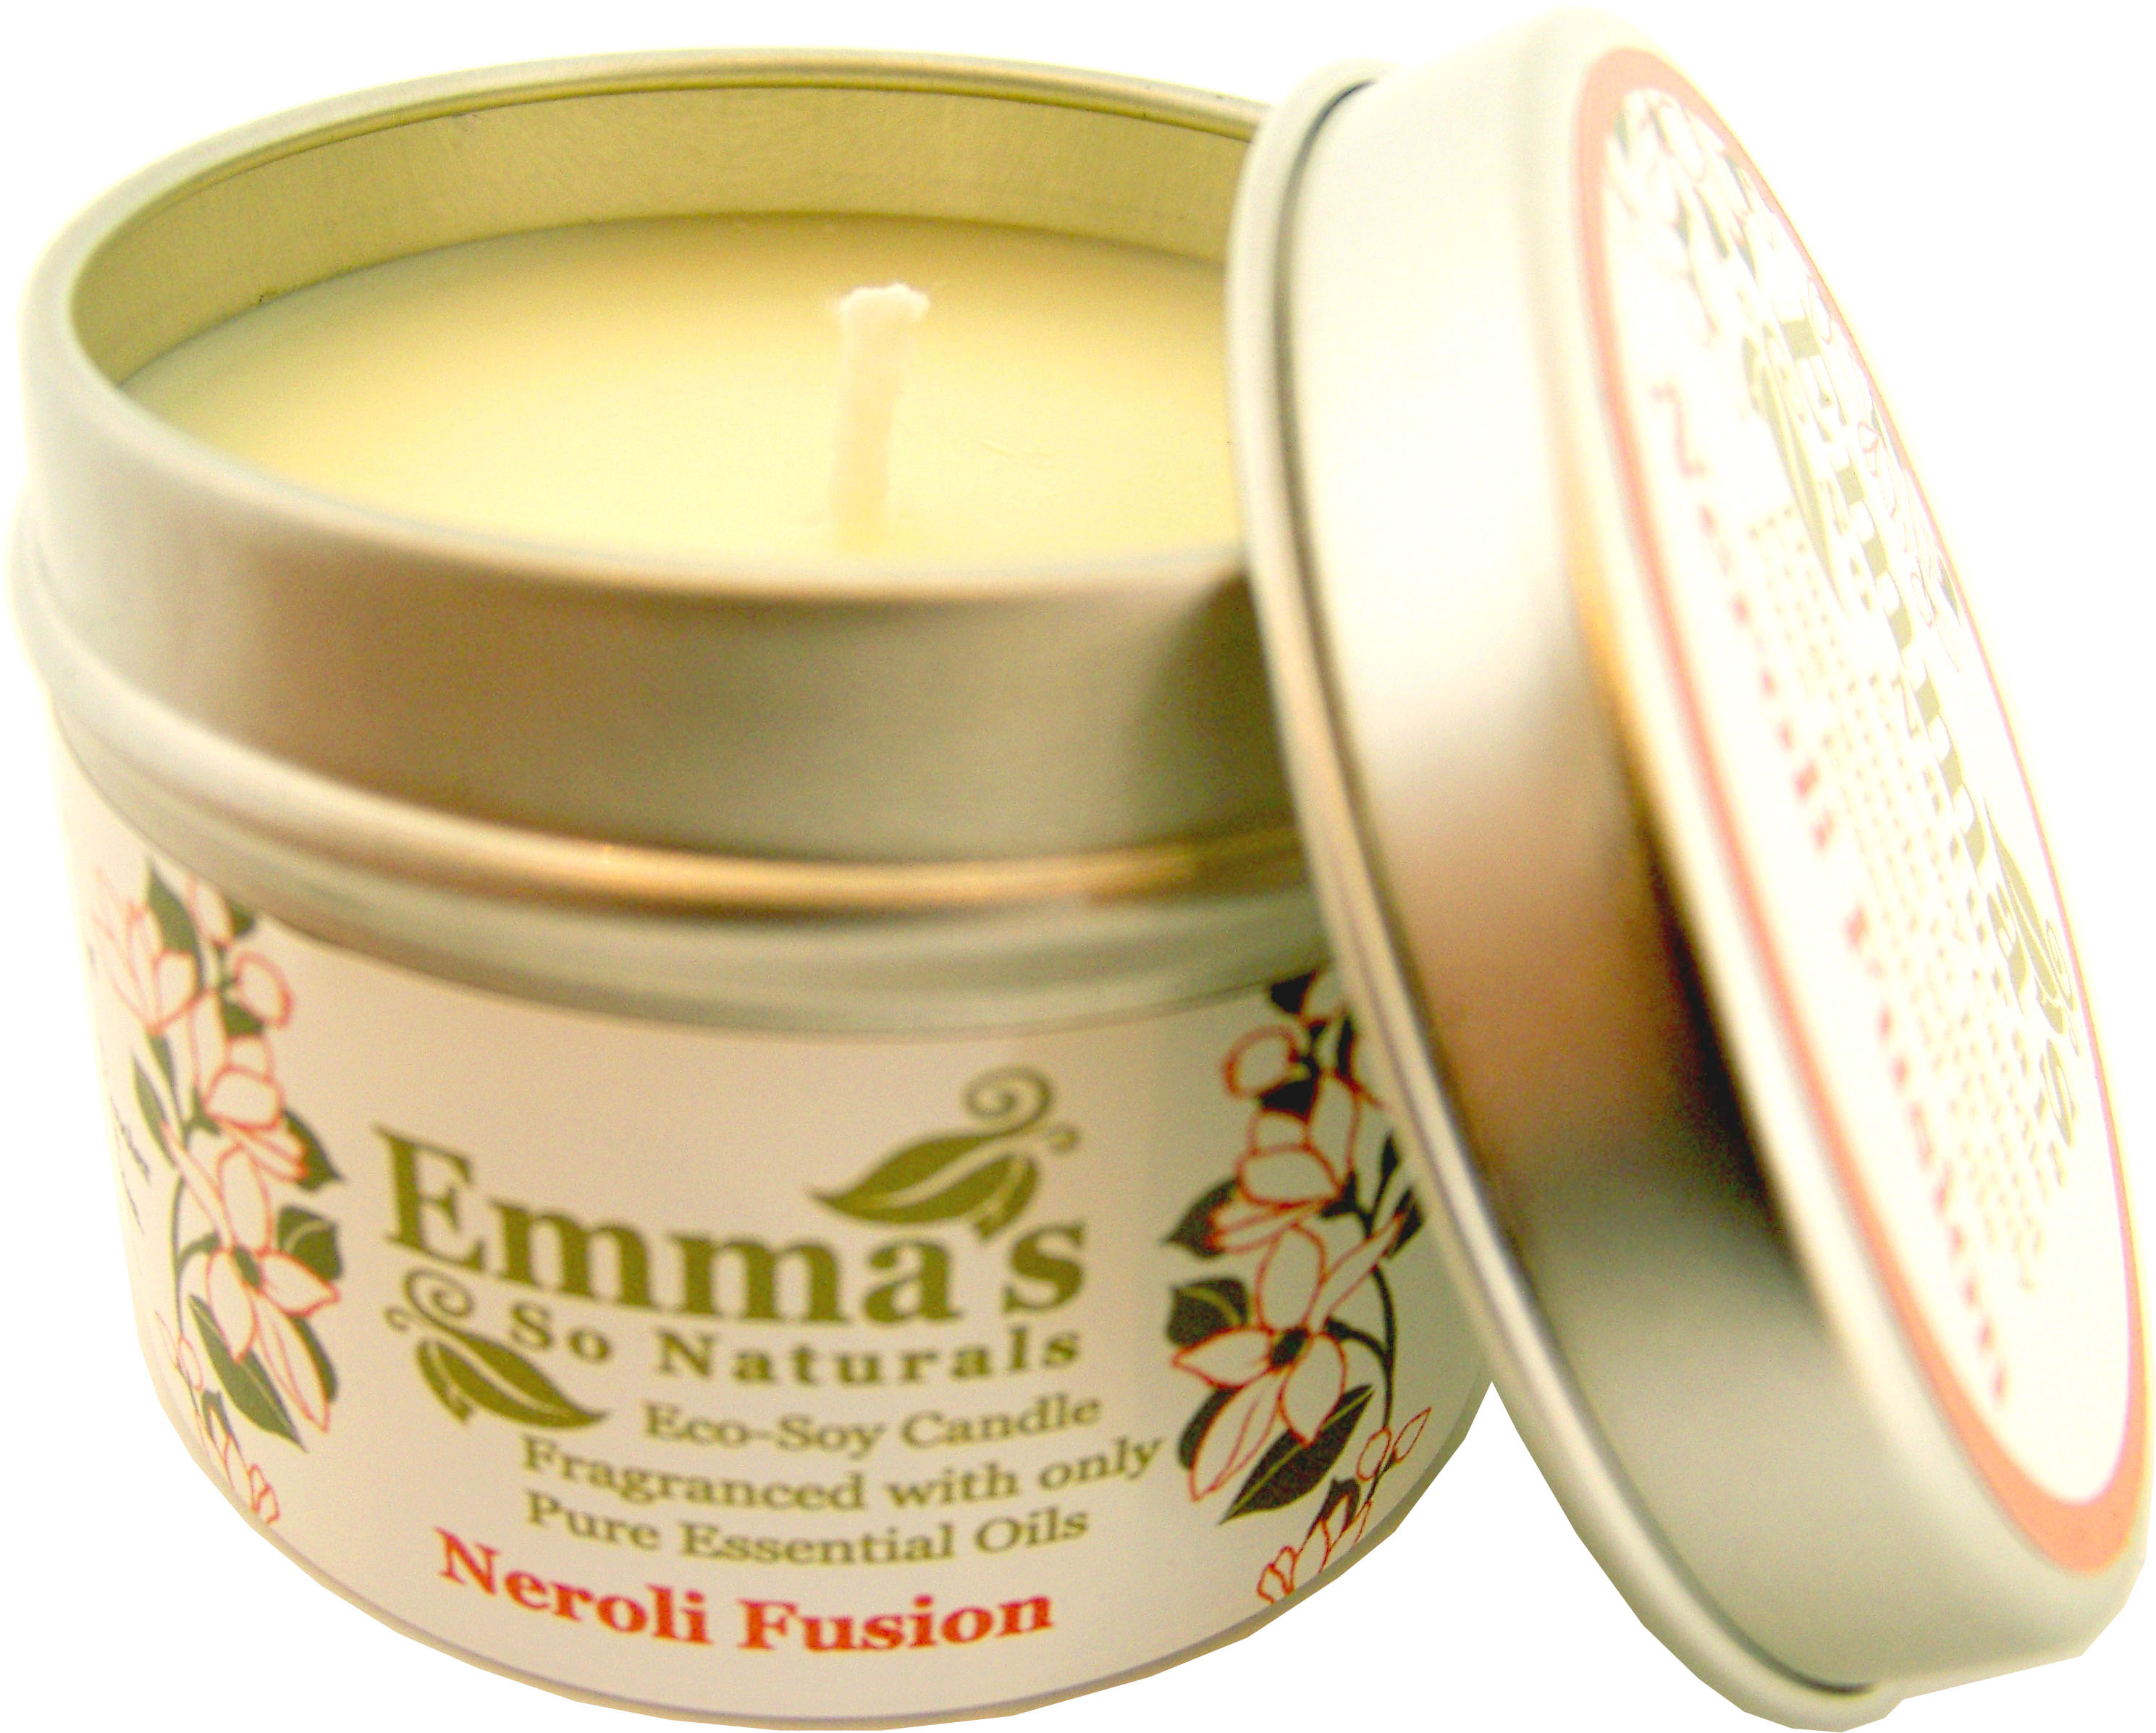 Emma's So Naturals Neroli Eco-Soy Candle Tin Open